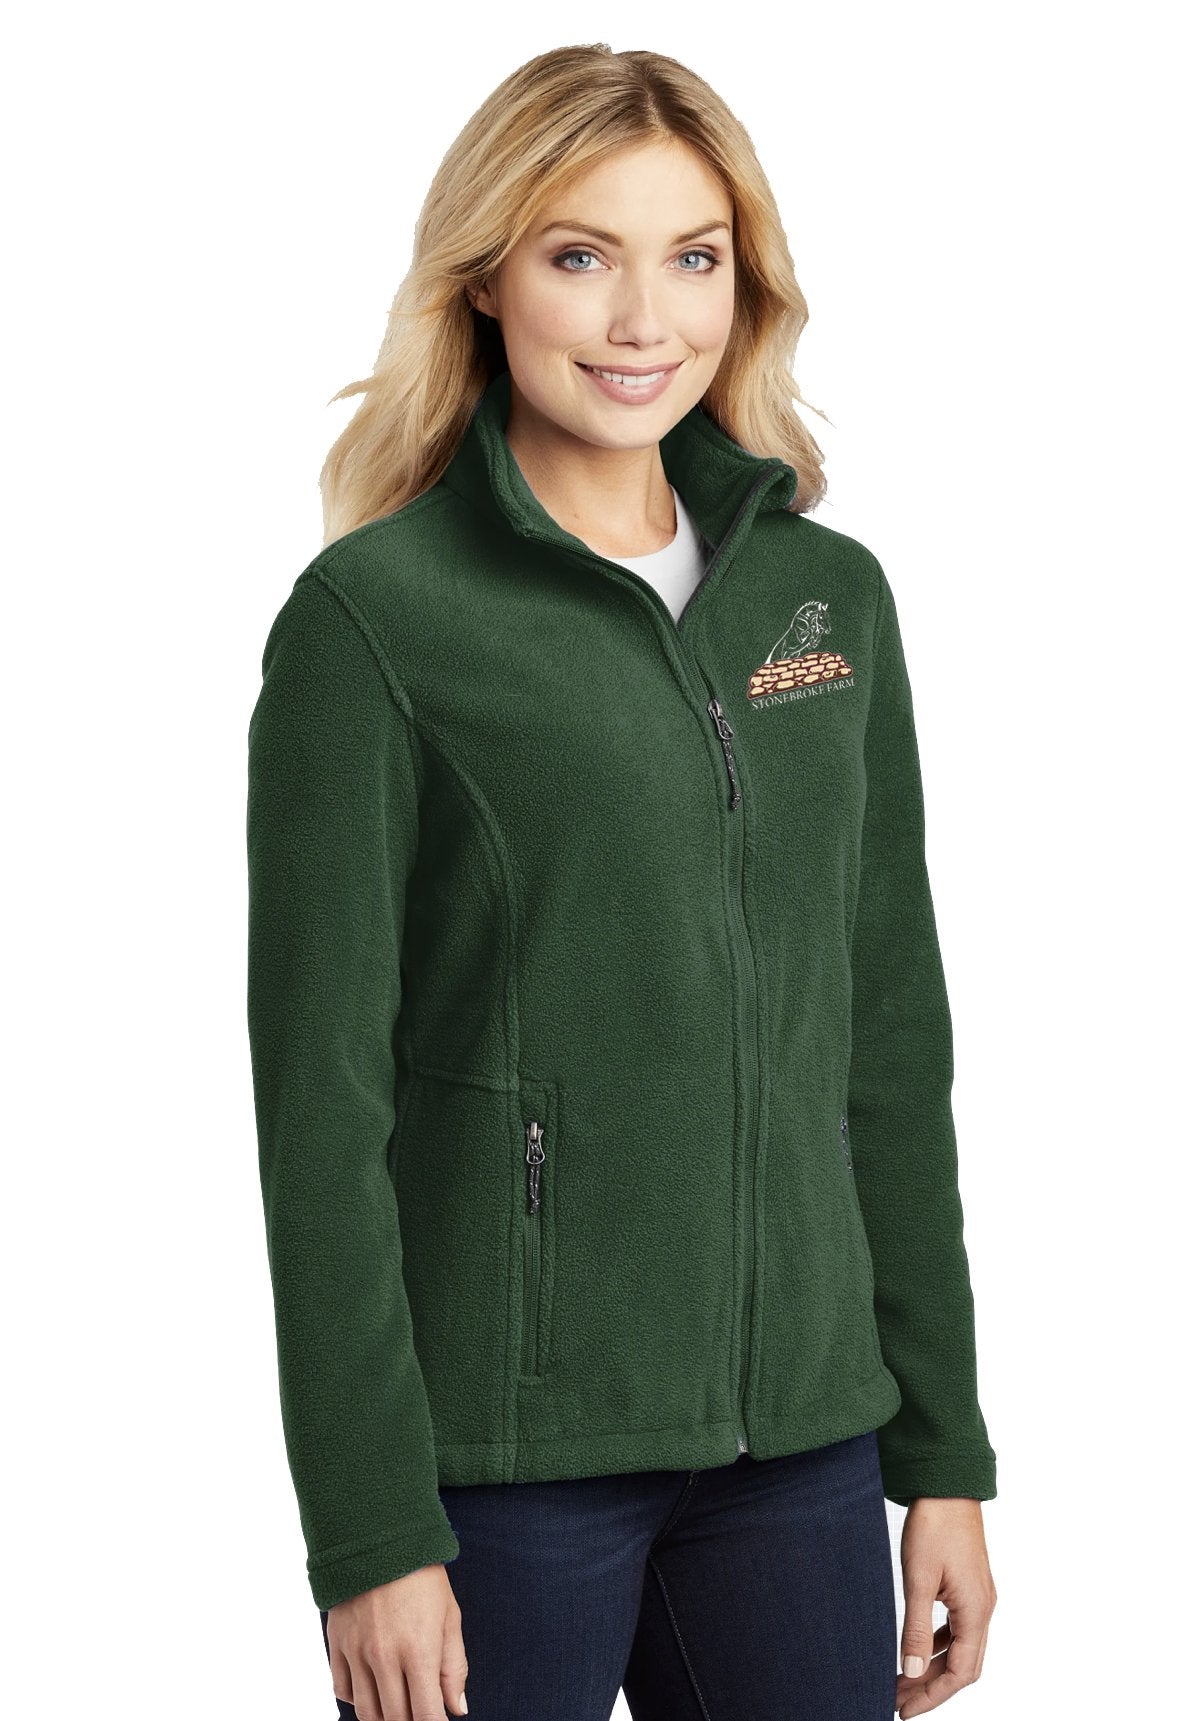 Stonebroke Farm Port Authority® Ladies Fleece Jacket - Hunter Green